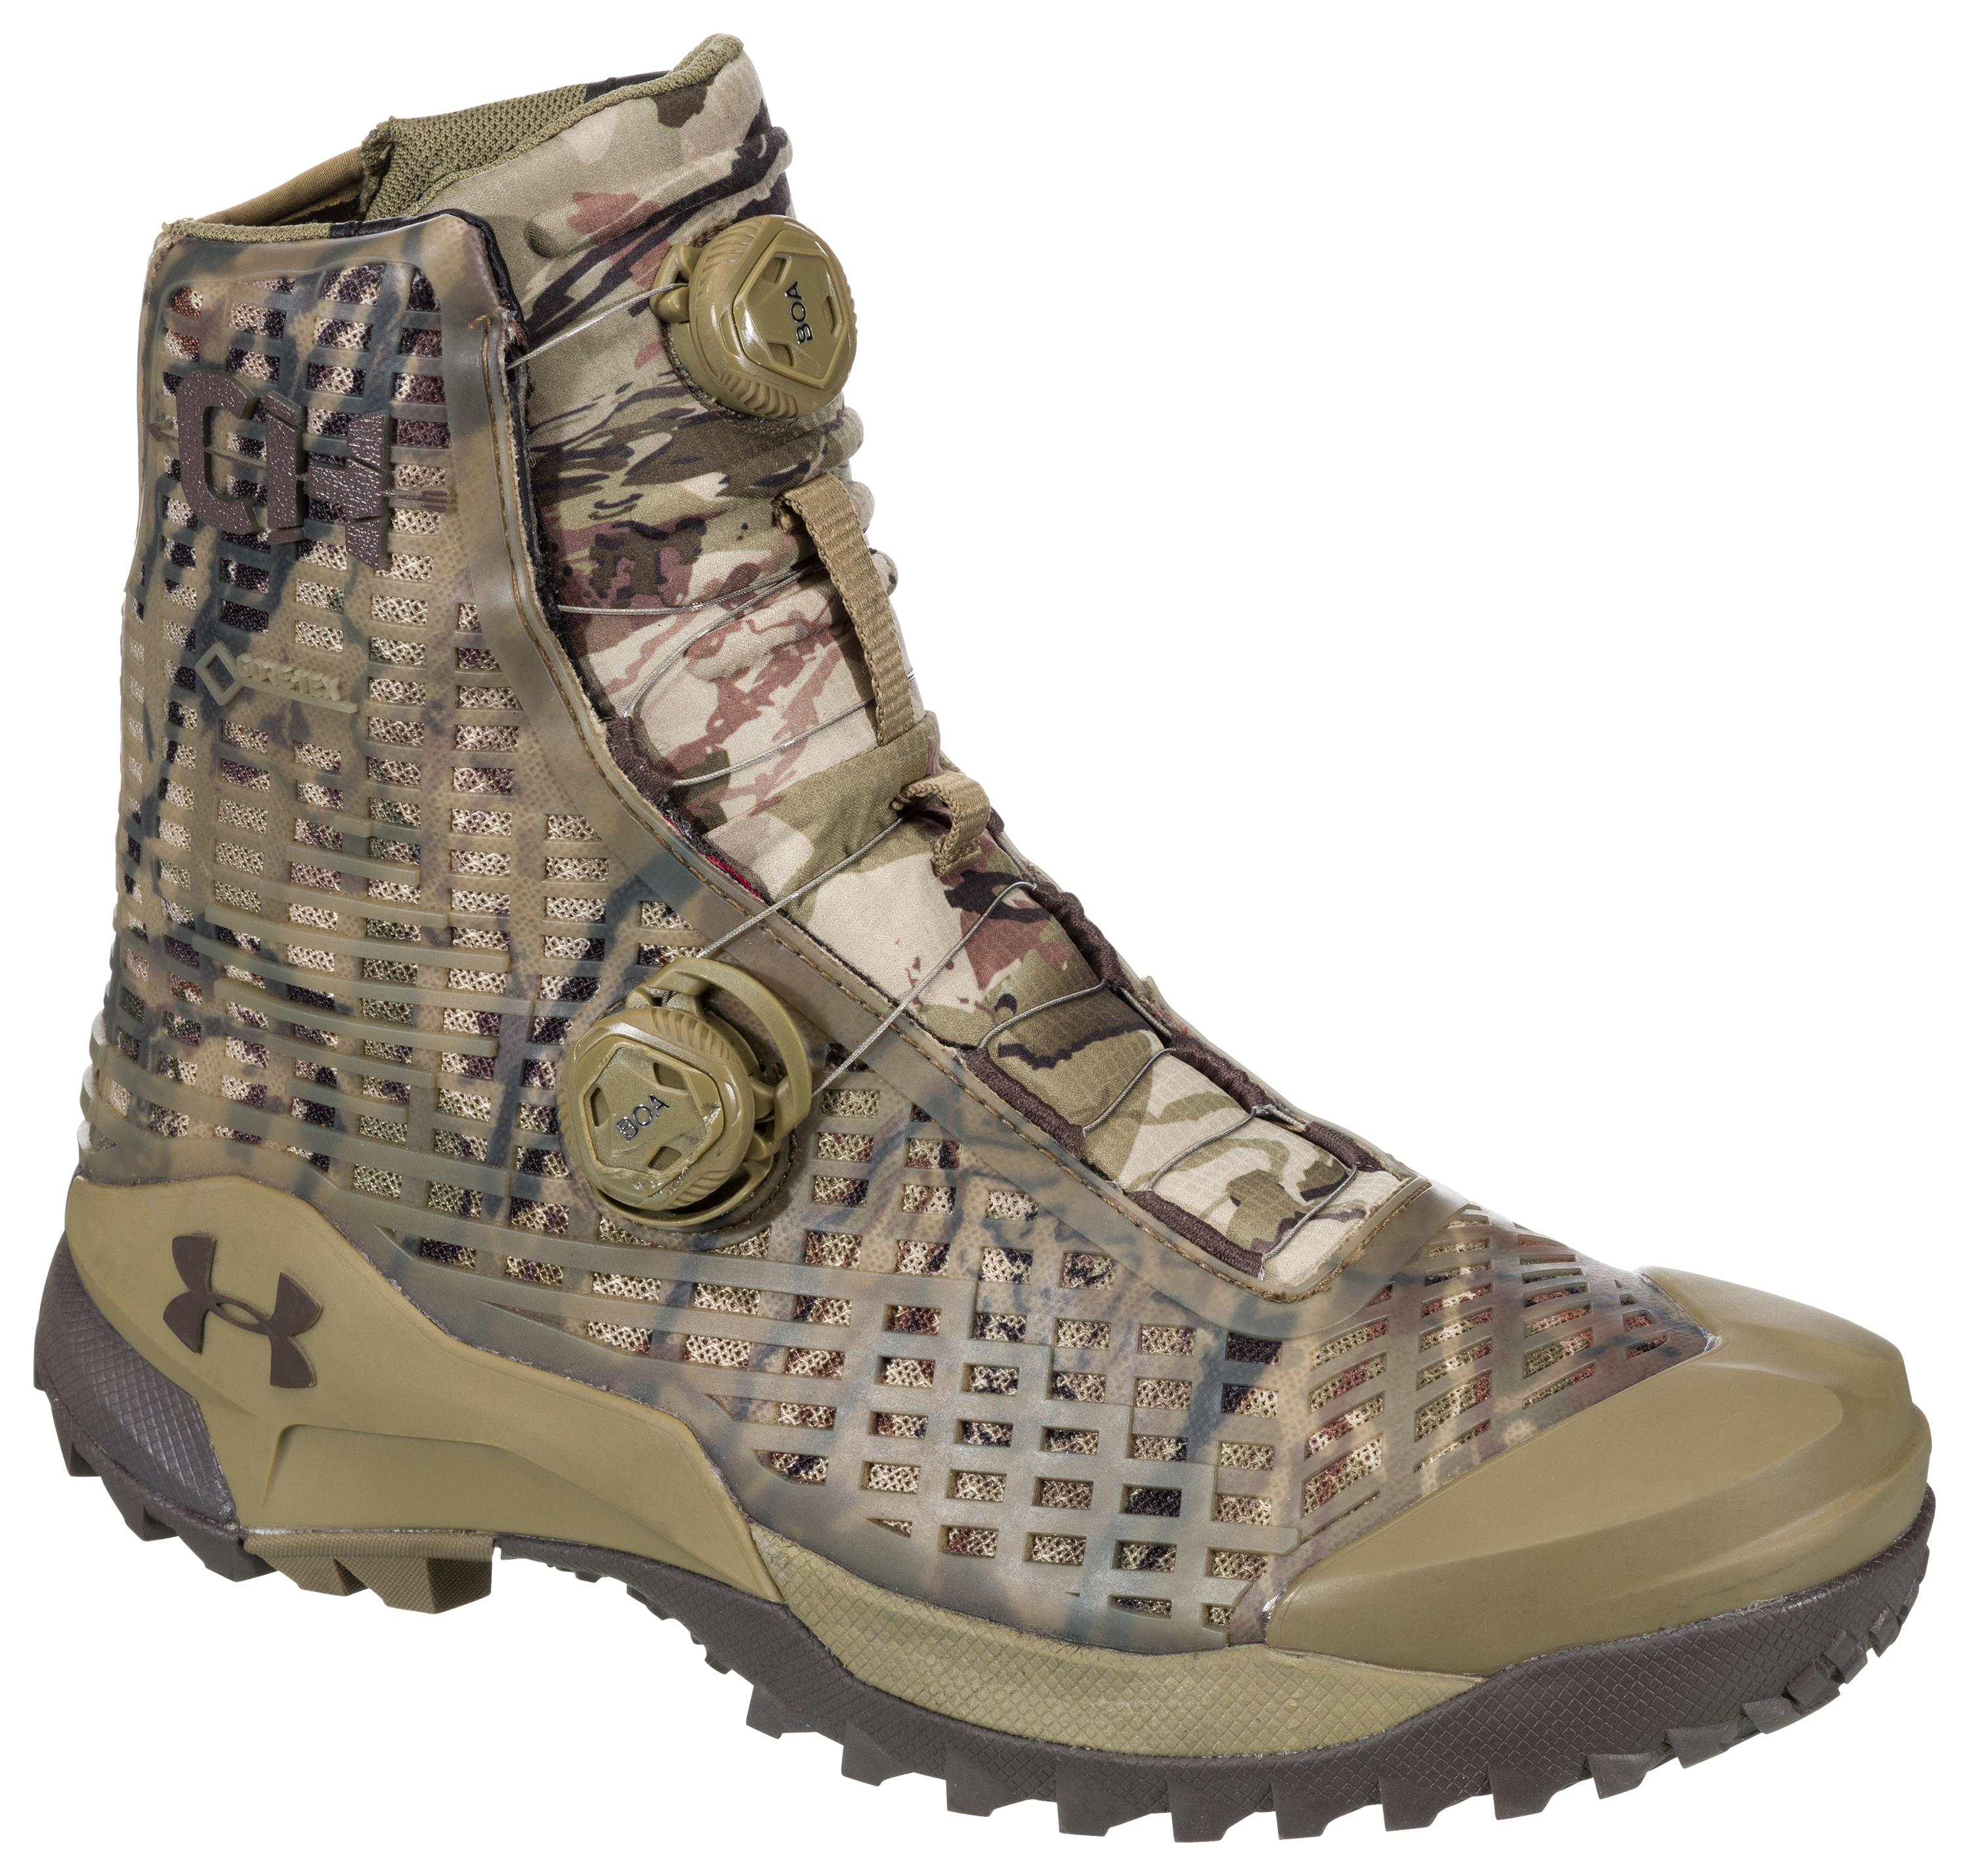 Under Armour CH1 GTX GORE-TEX Tactical Boots  for Men - Bayou Ridge Reaper Camo Barren - 8 5M